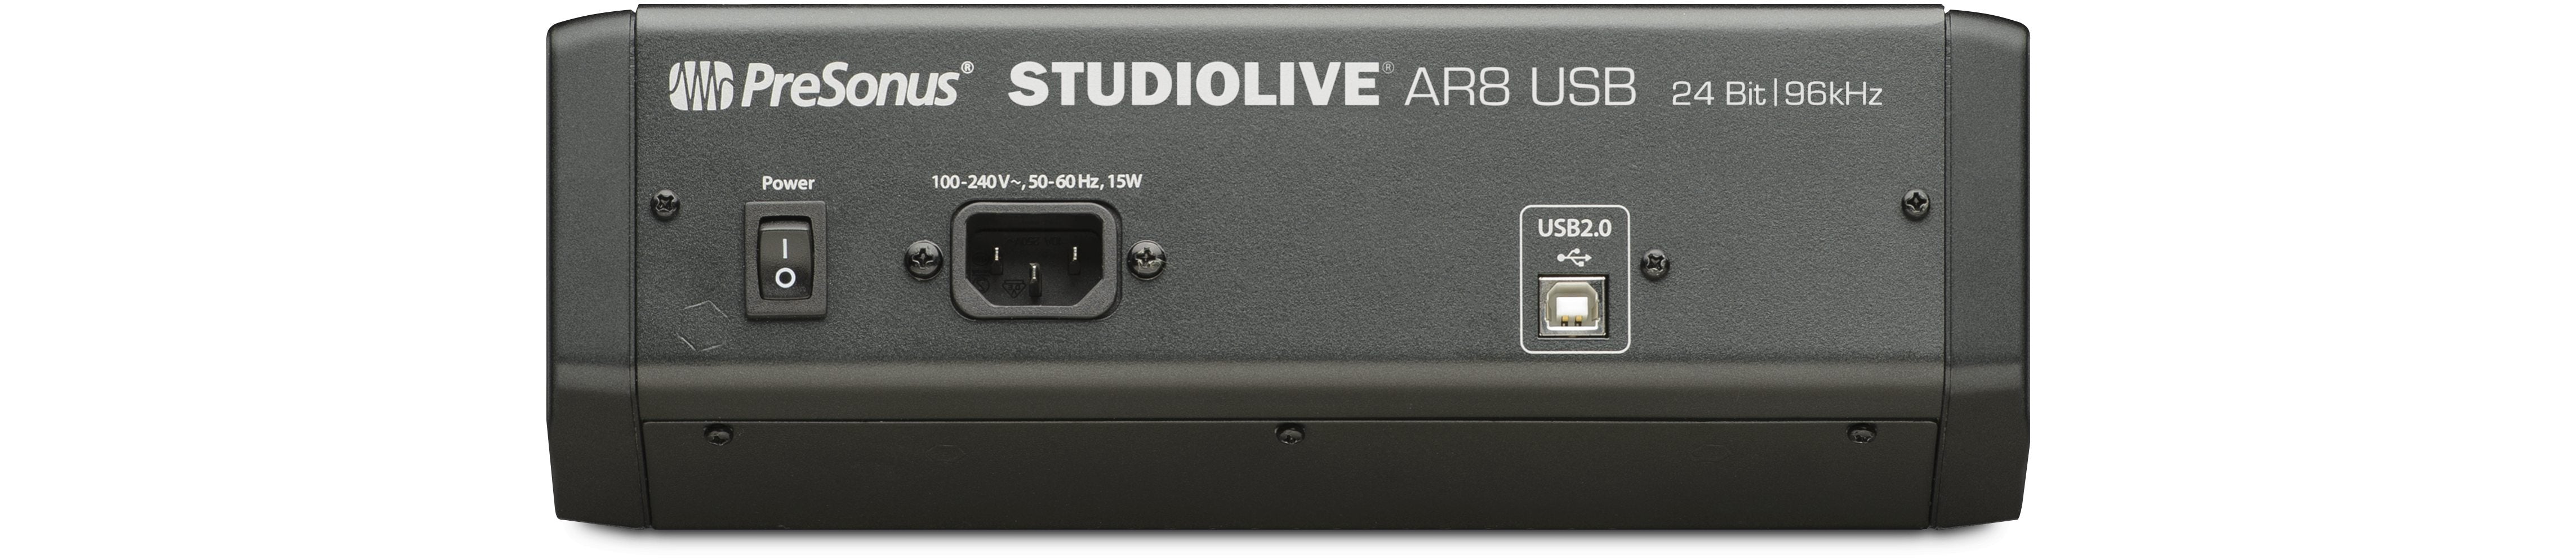 StudioLive AR8